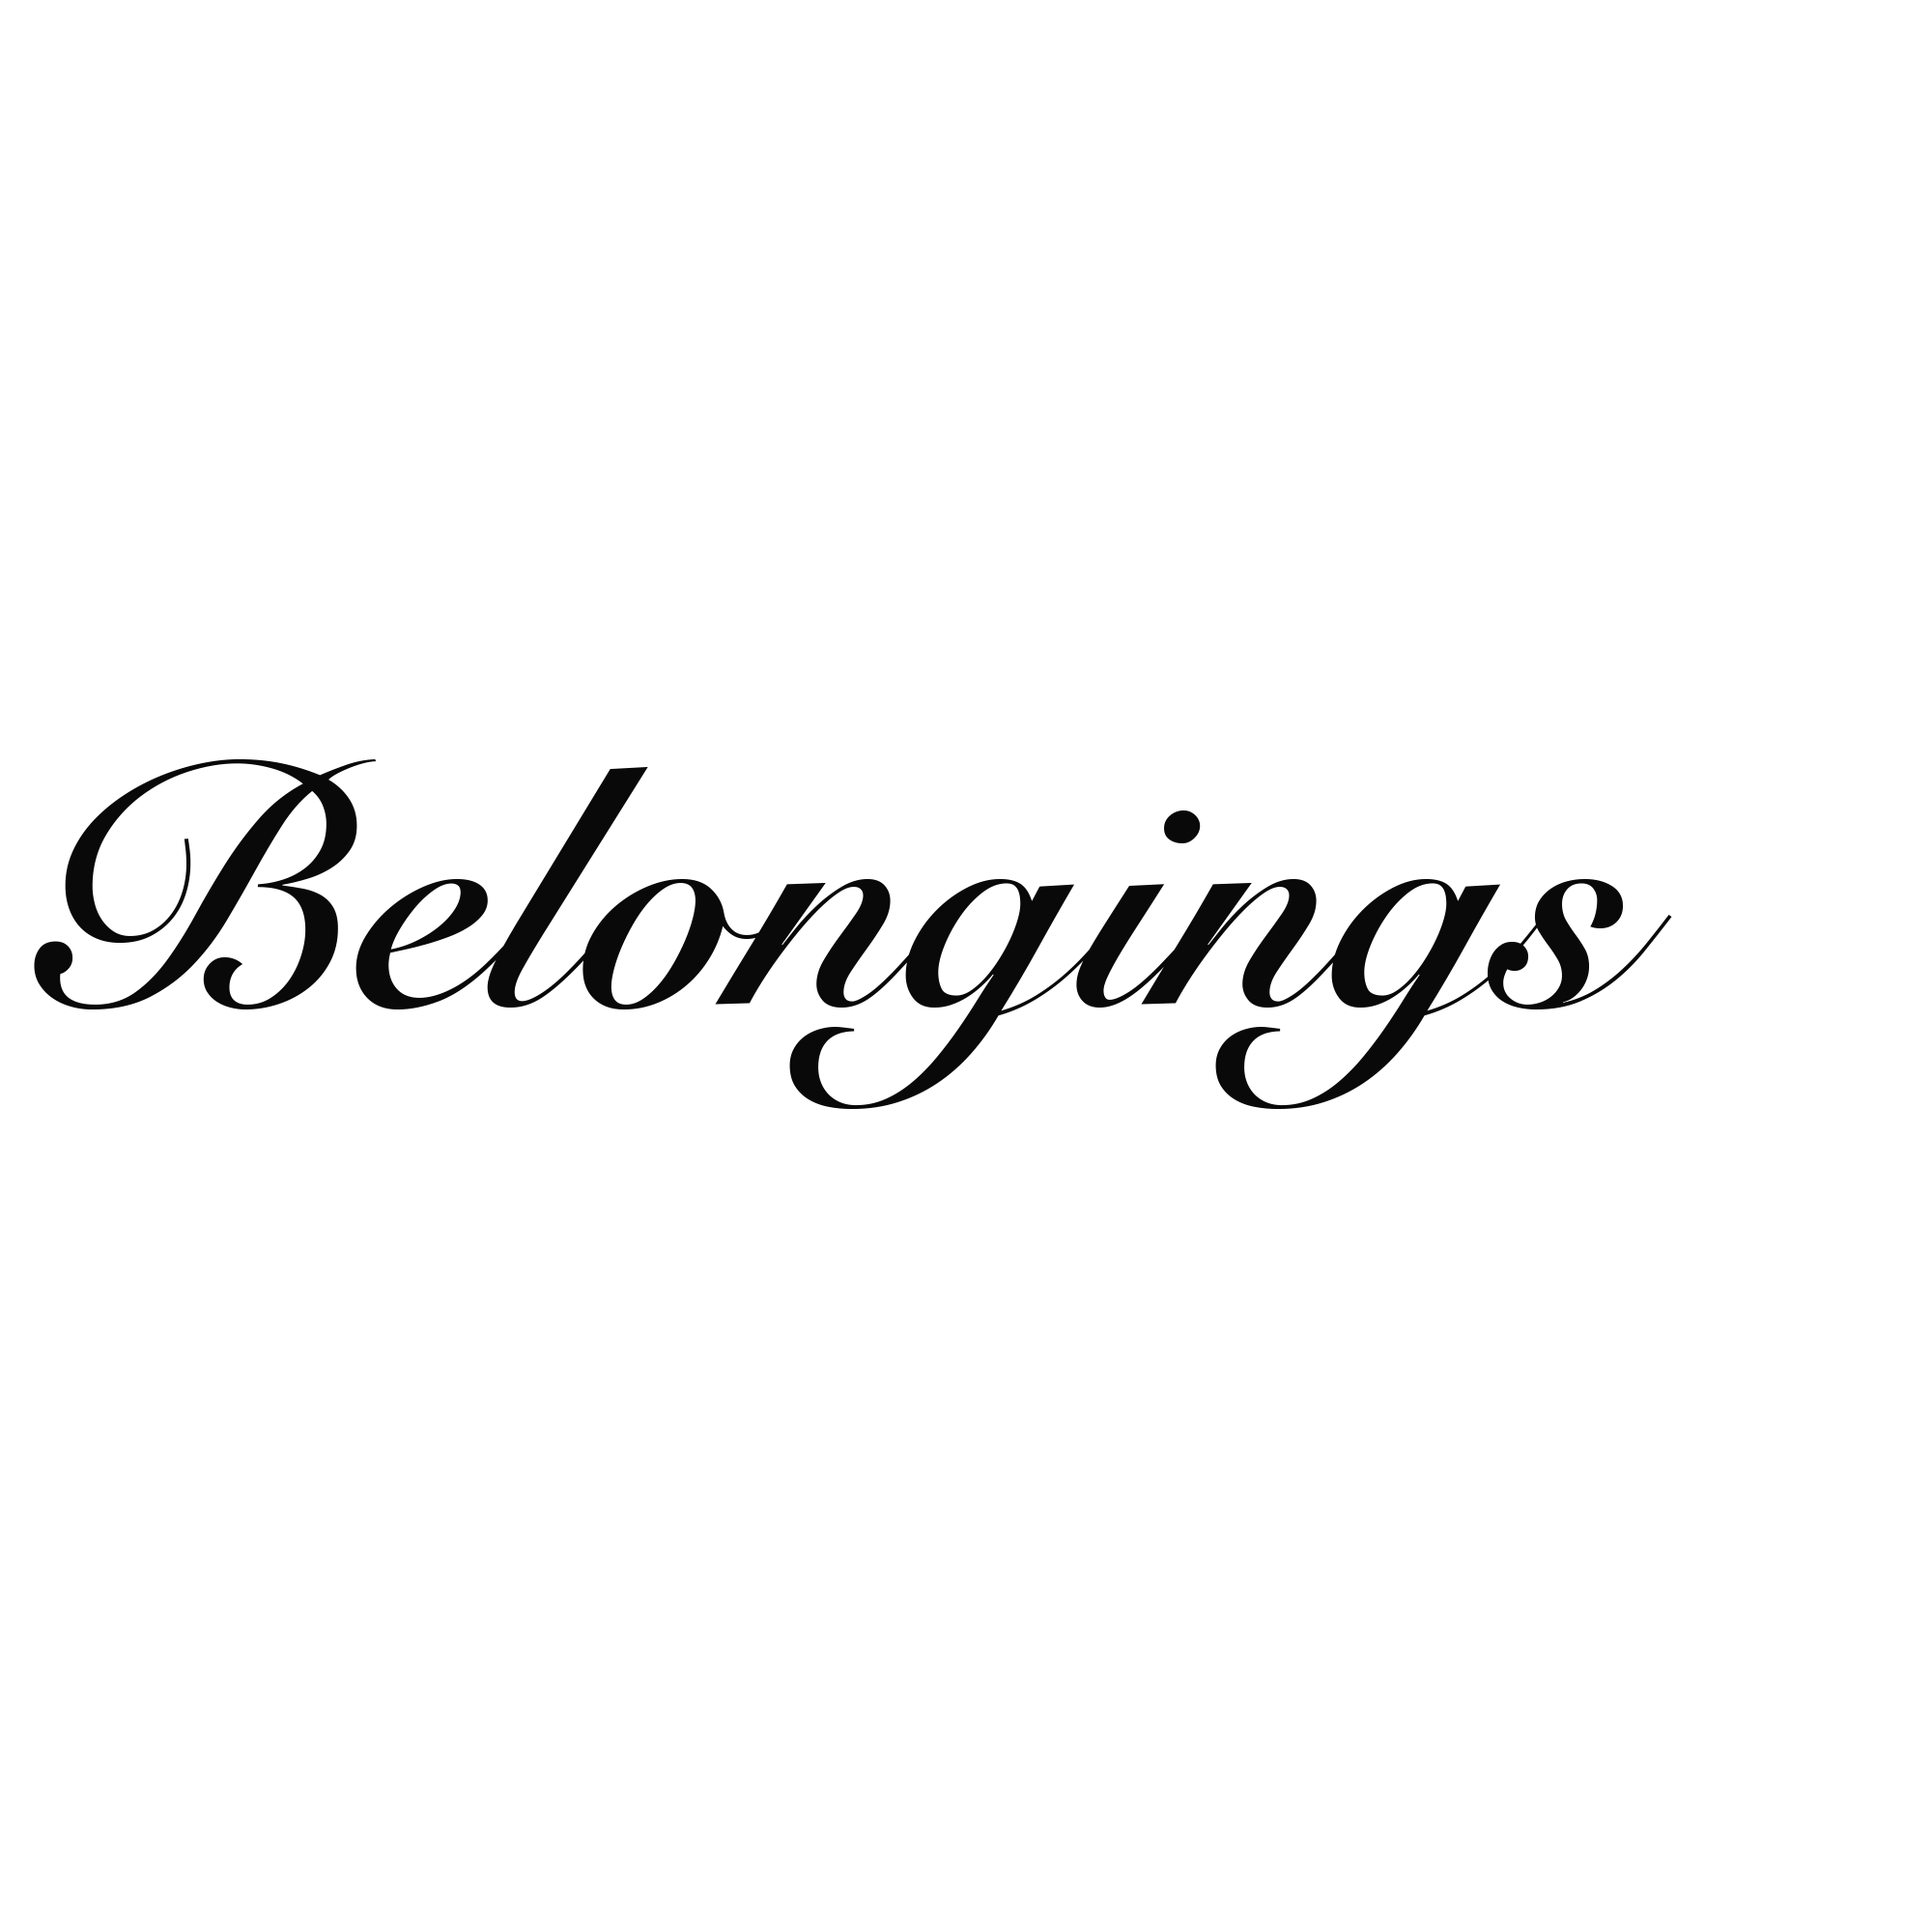  Belongings